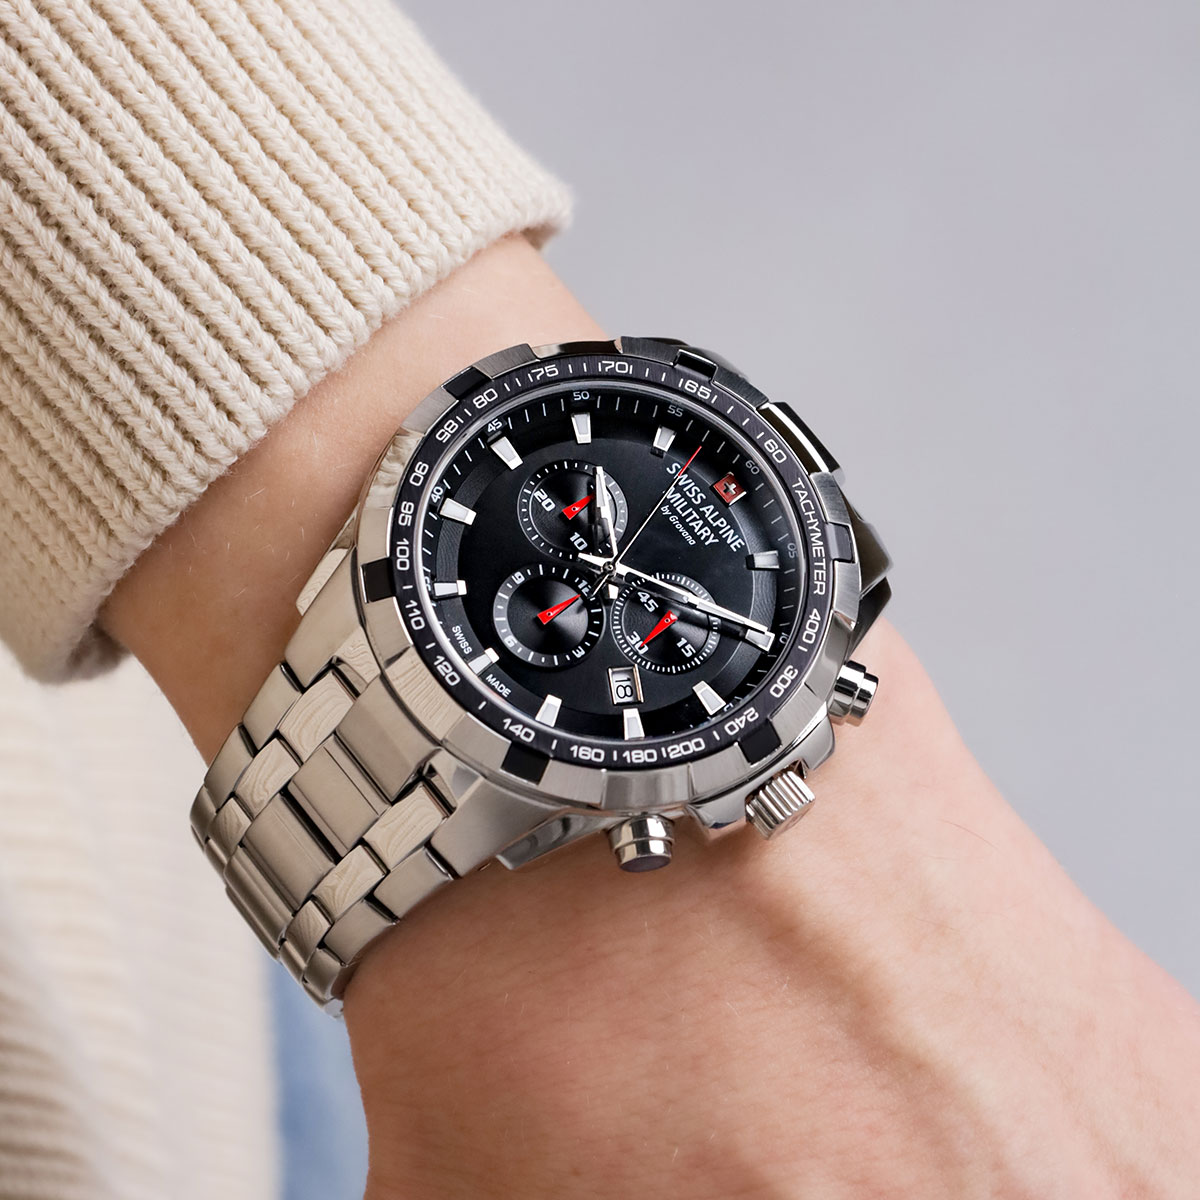 Swiss Alpine Military 7043.9235 watch with sapphire crystal